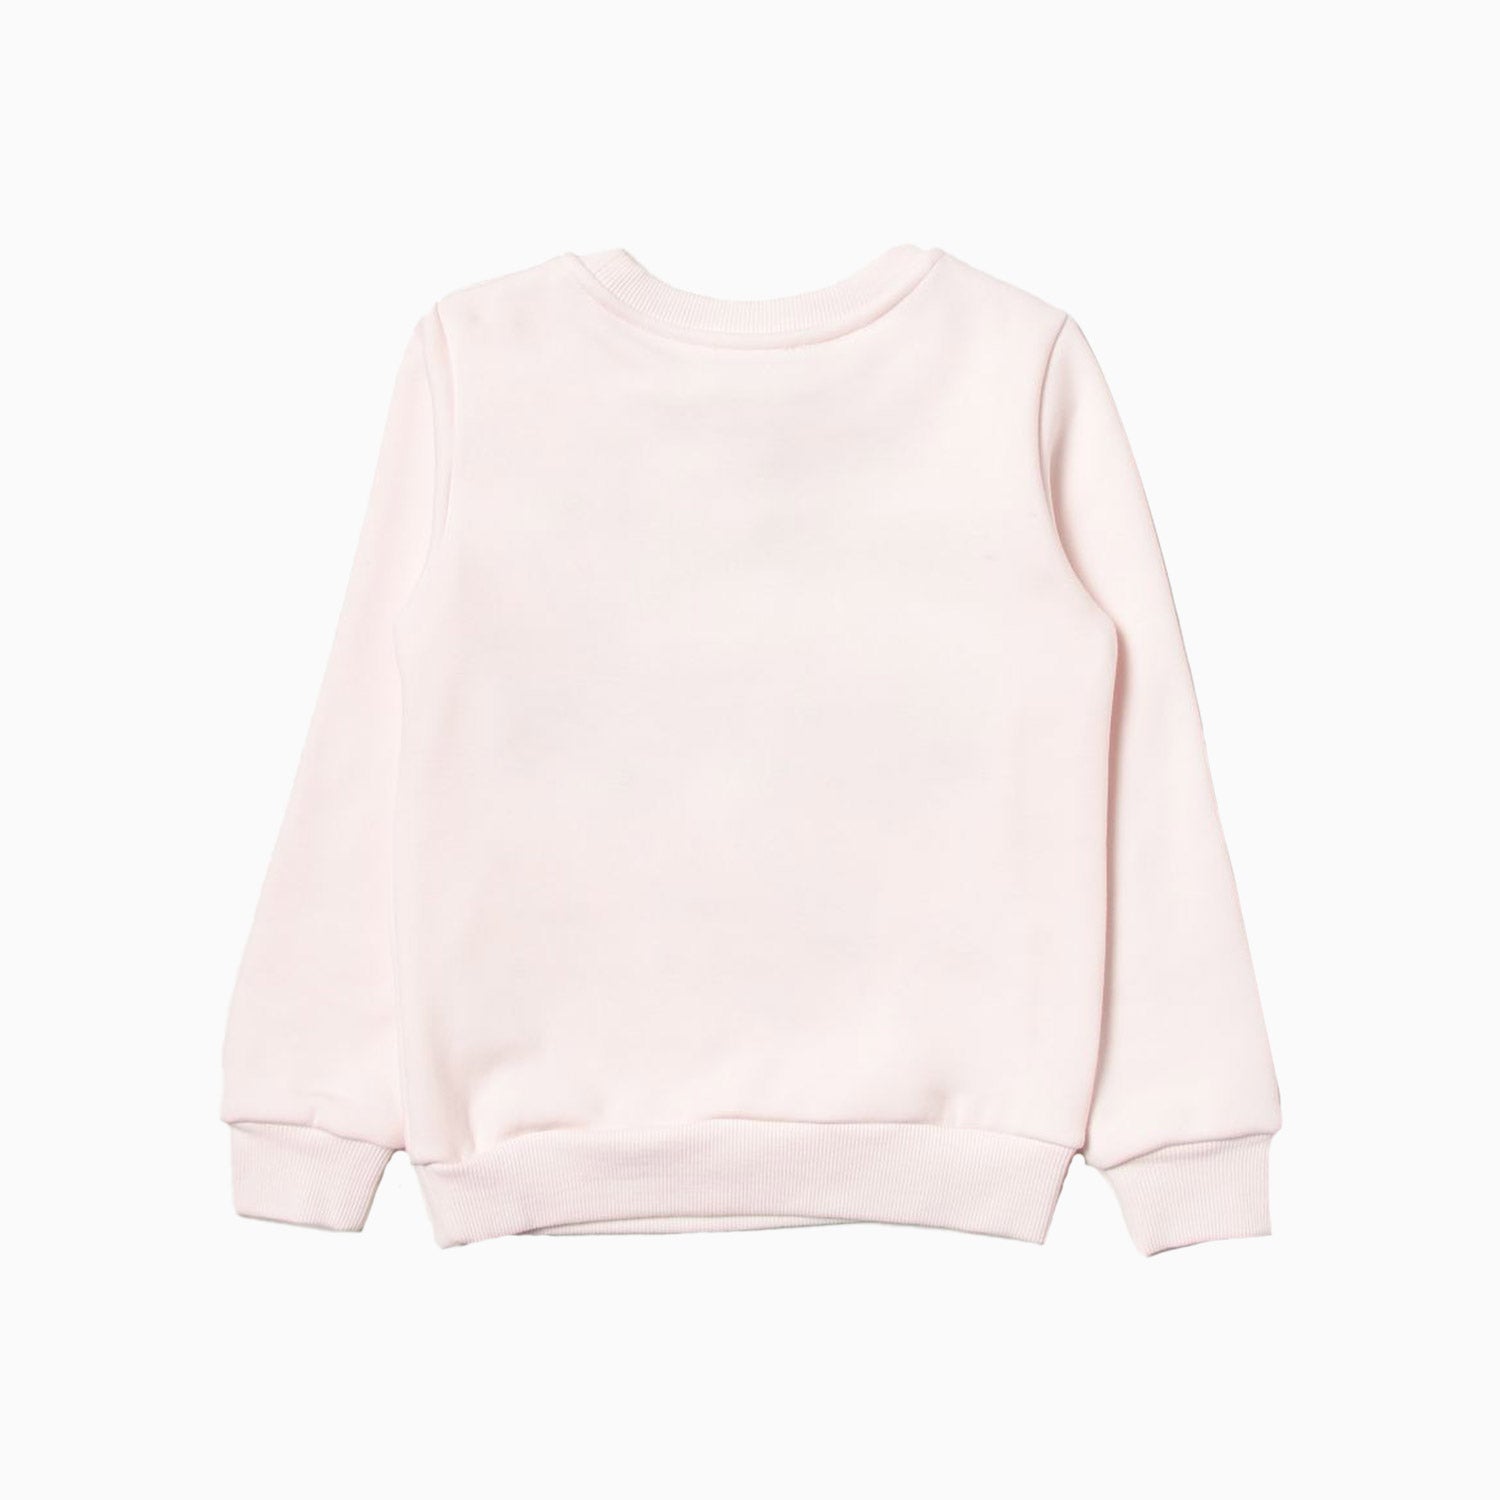 Kenzo Kid's Elephant Logo Crew Neck Full Sleeve Sweatshirt - Color: Pale Pink - Kids Premium Clothing -